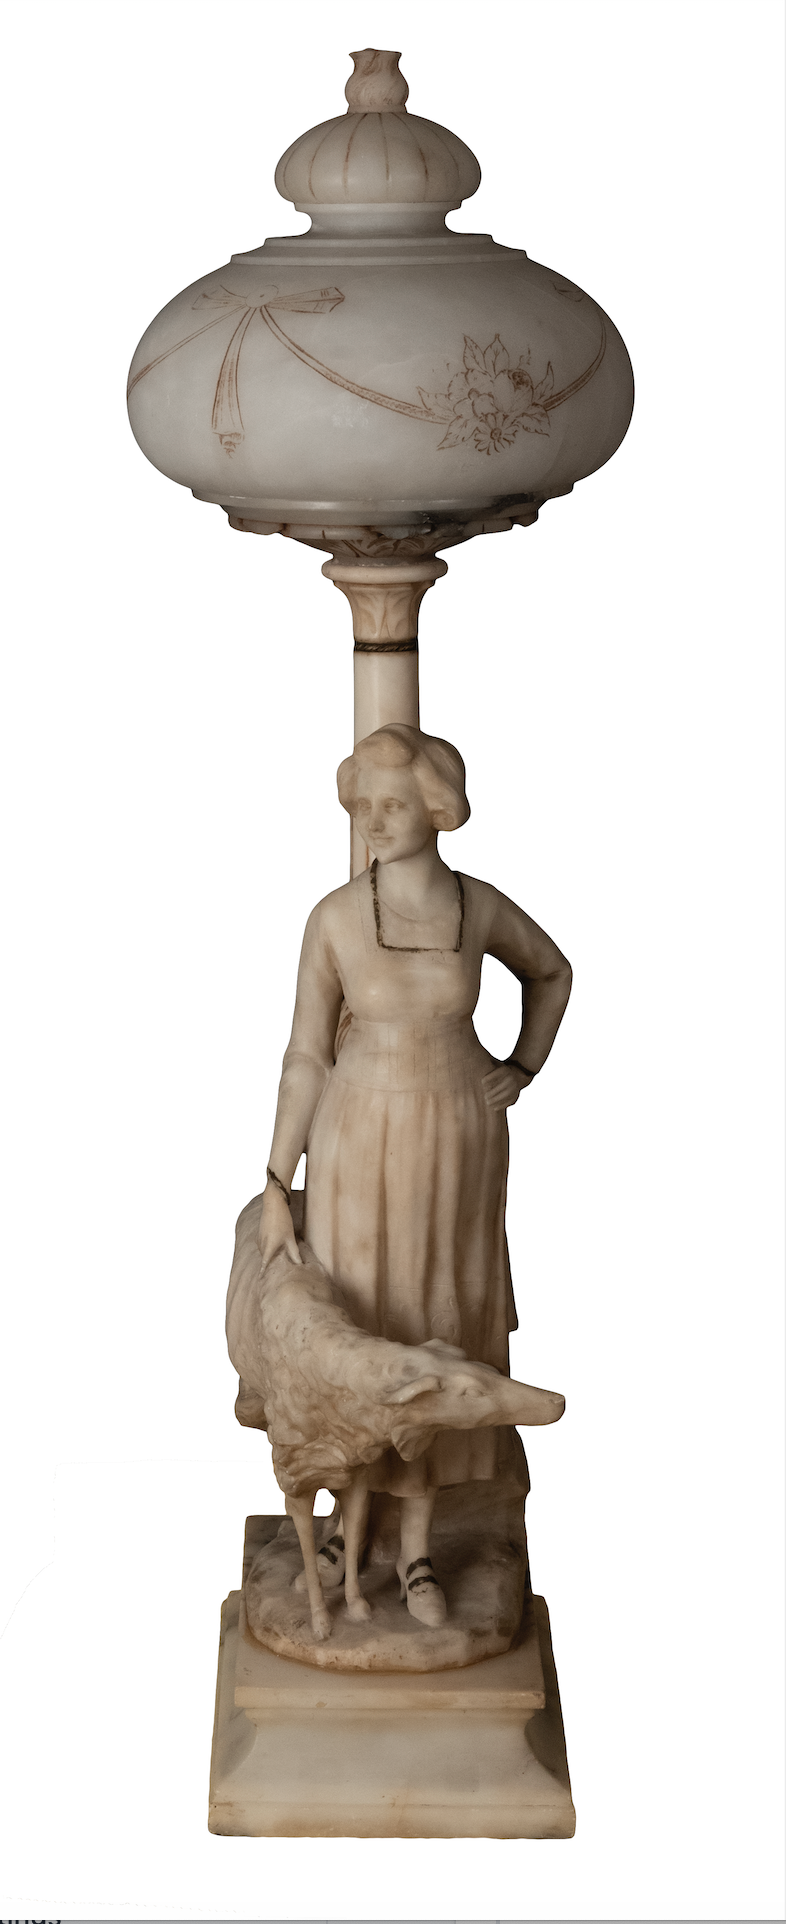 Italian Art Nouveau Alabaster Sculptural Lamp (c. 1890)